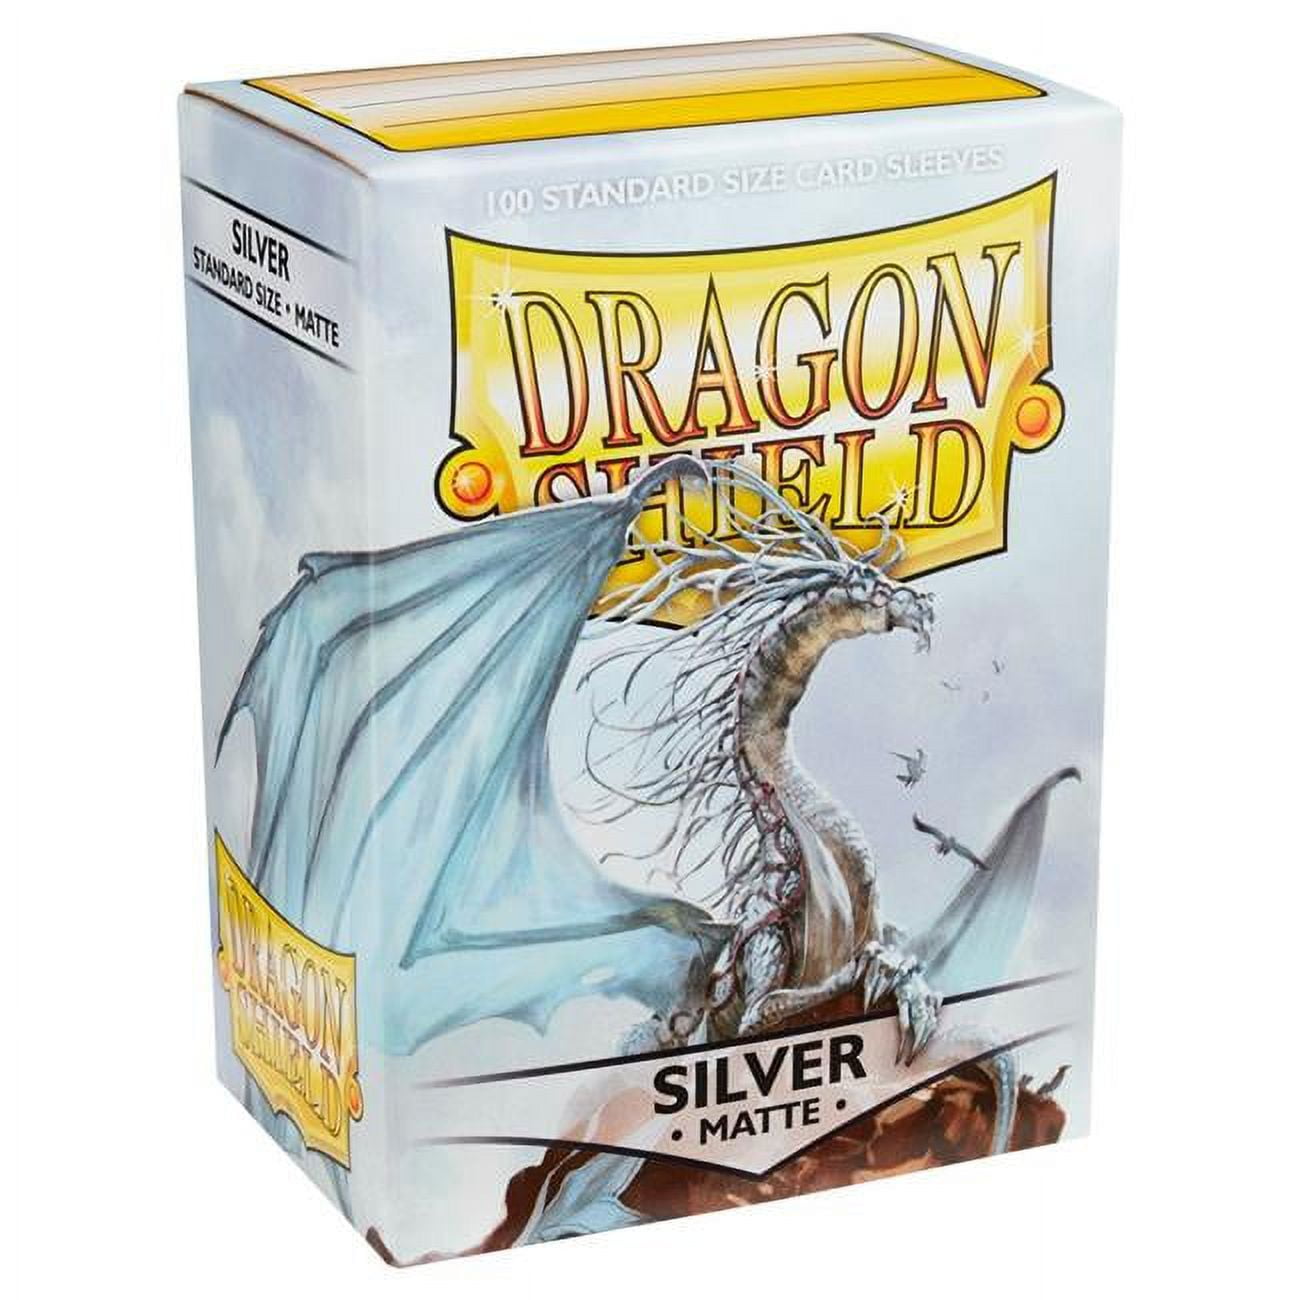 Dp Dragon Shield Matte, Pack Of 100 - Silver